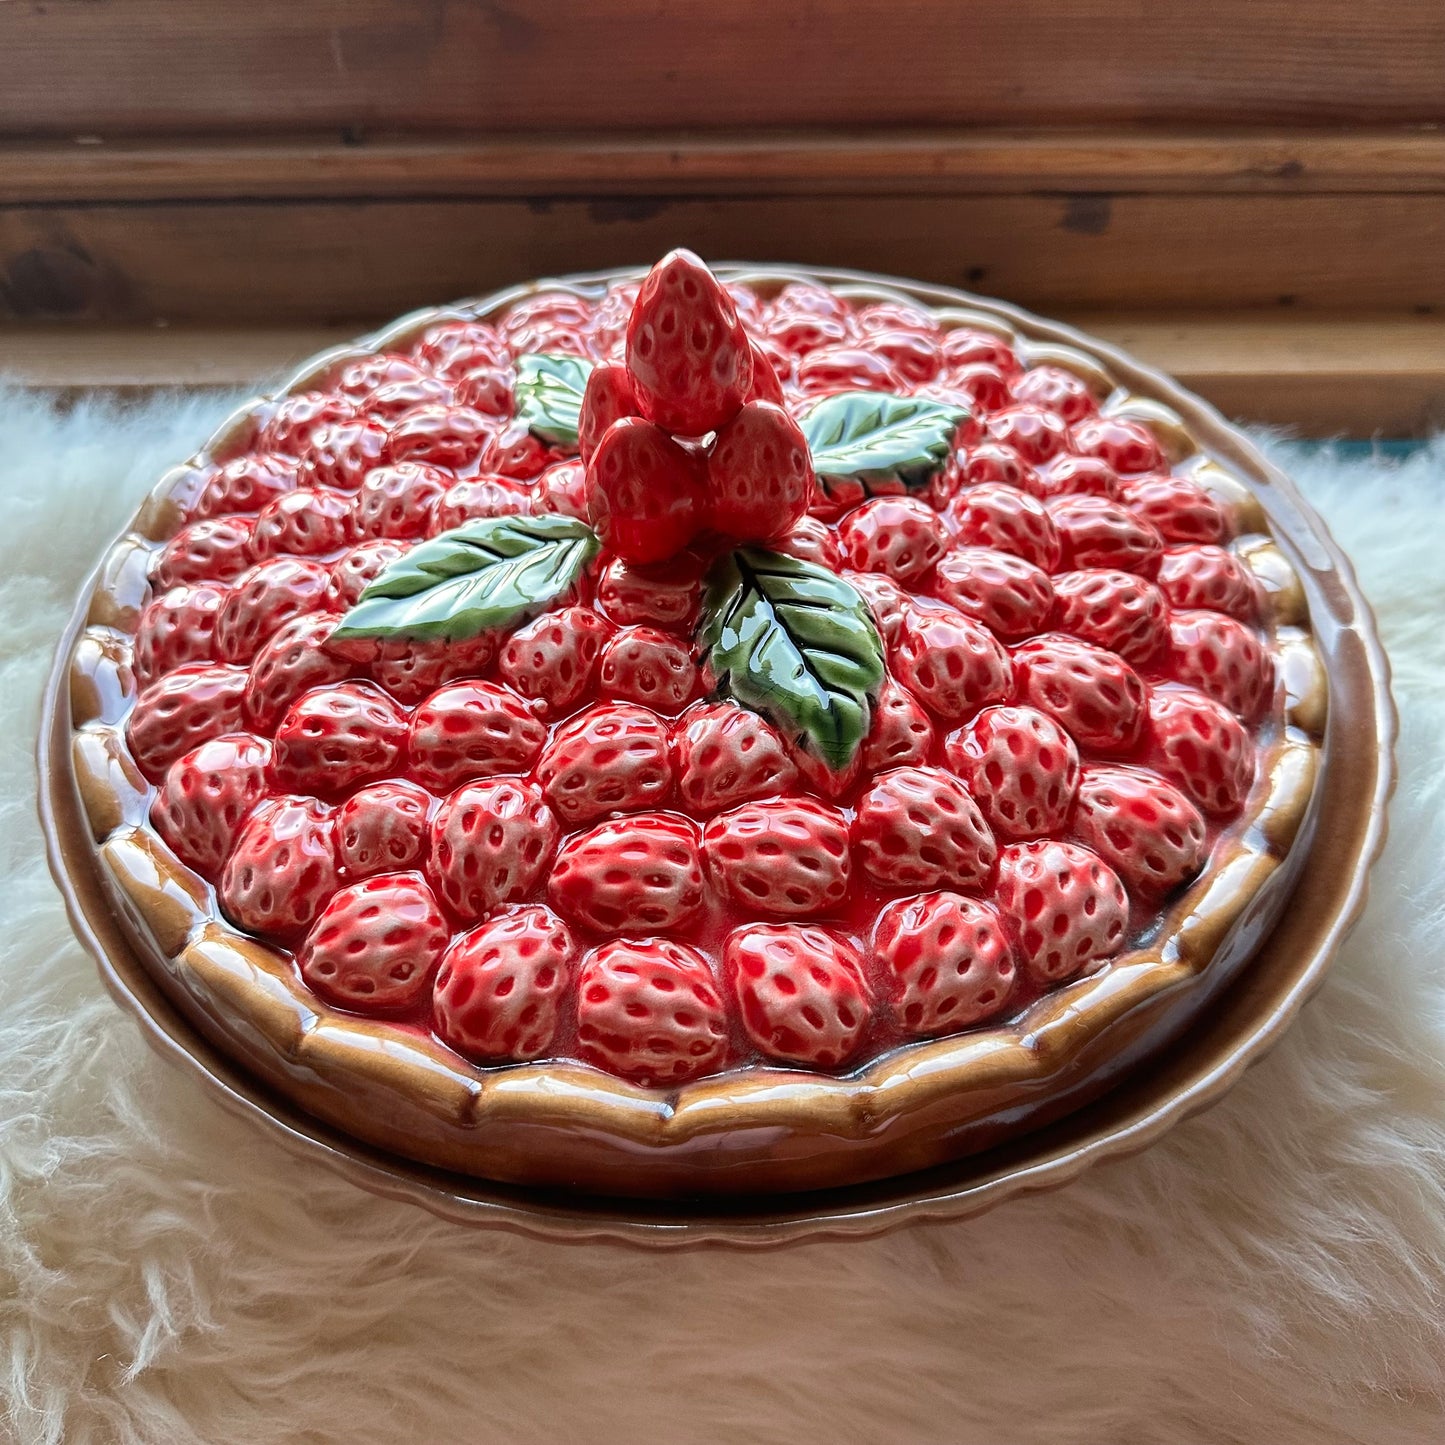 Strawberry Pie Dish